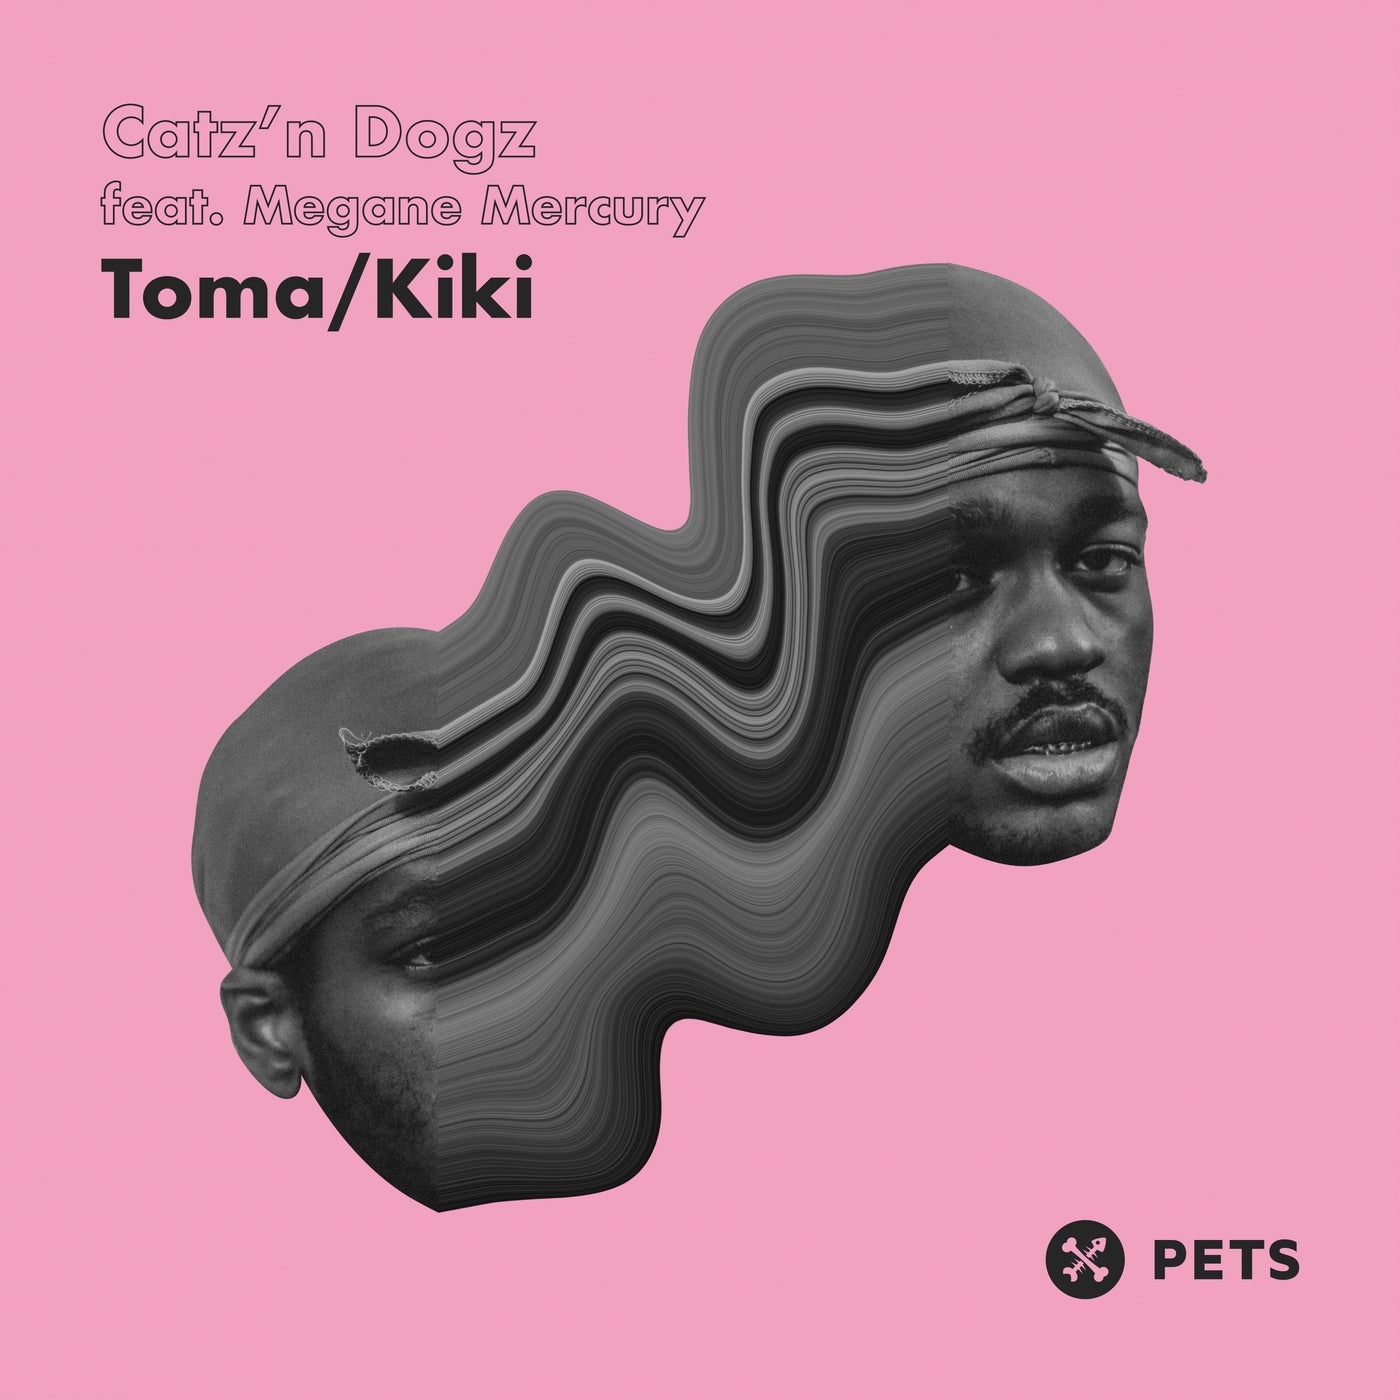 Catz 'n Dogz, Megane Mercury - Toma - Kiki EP [PETS143]